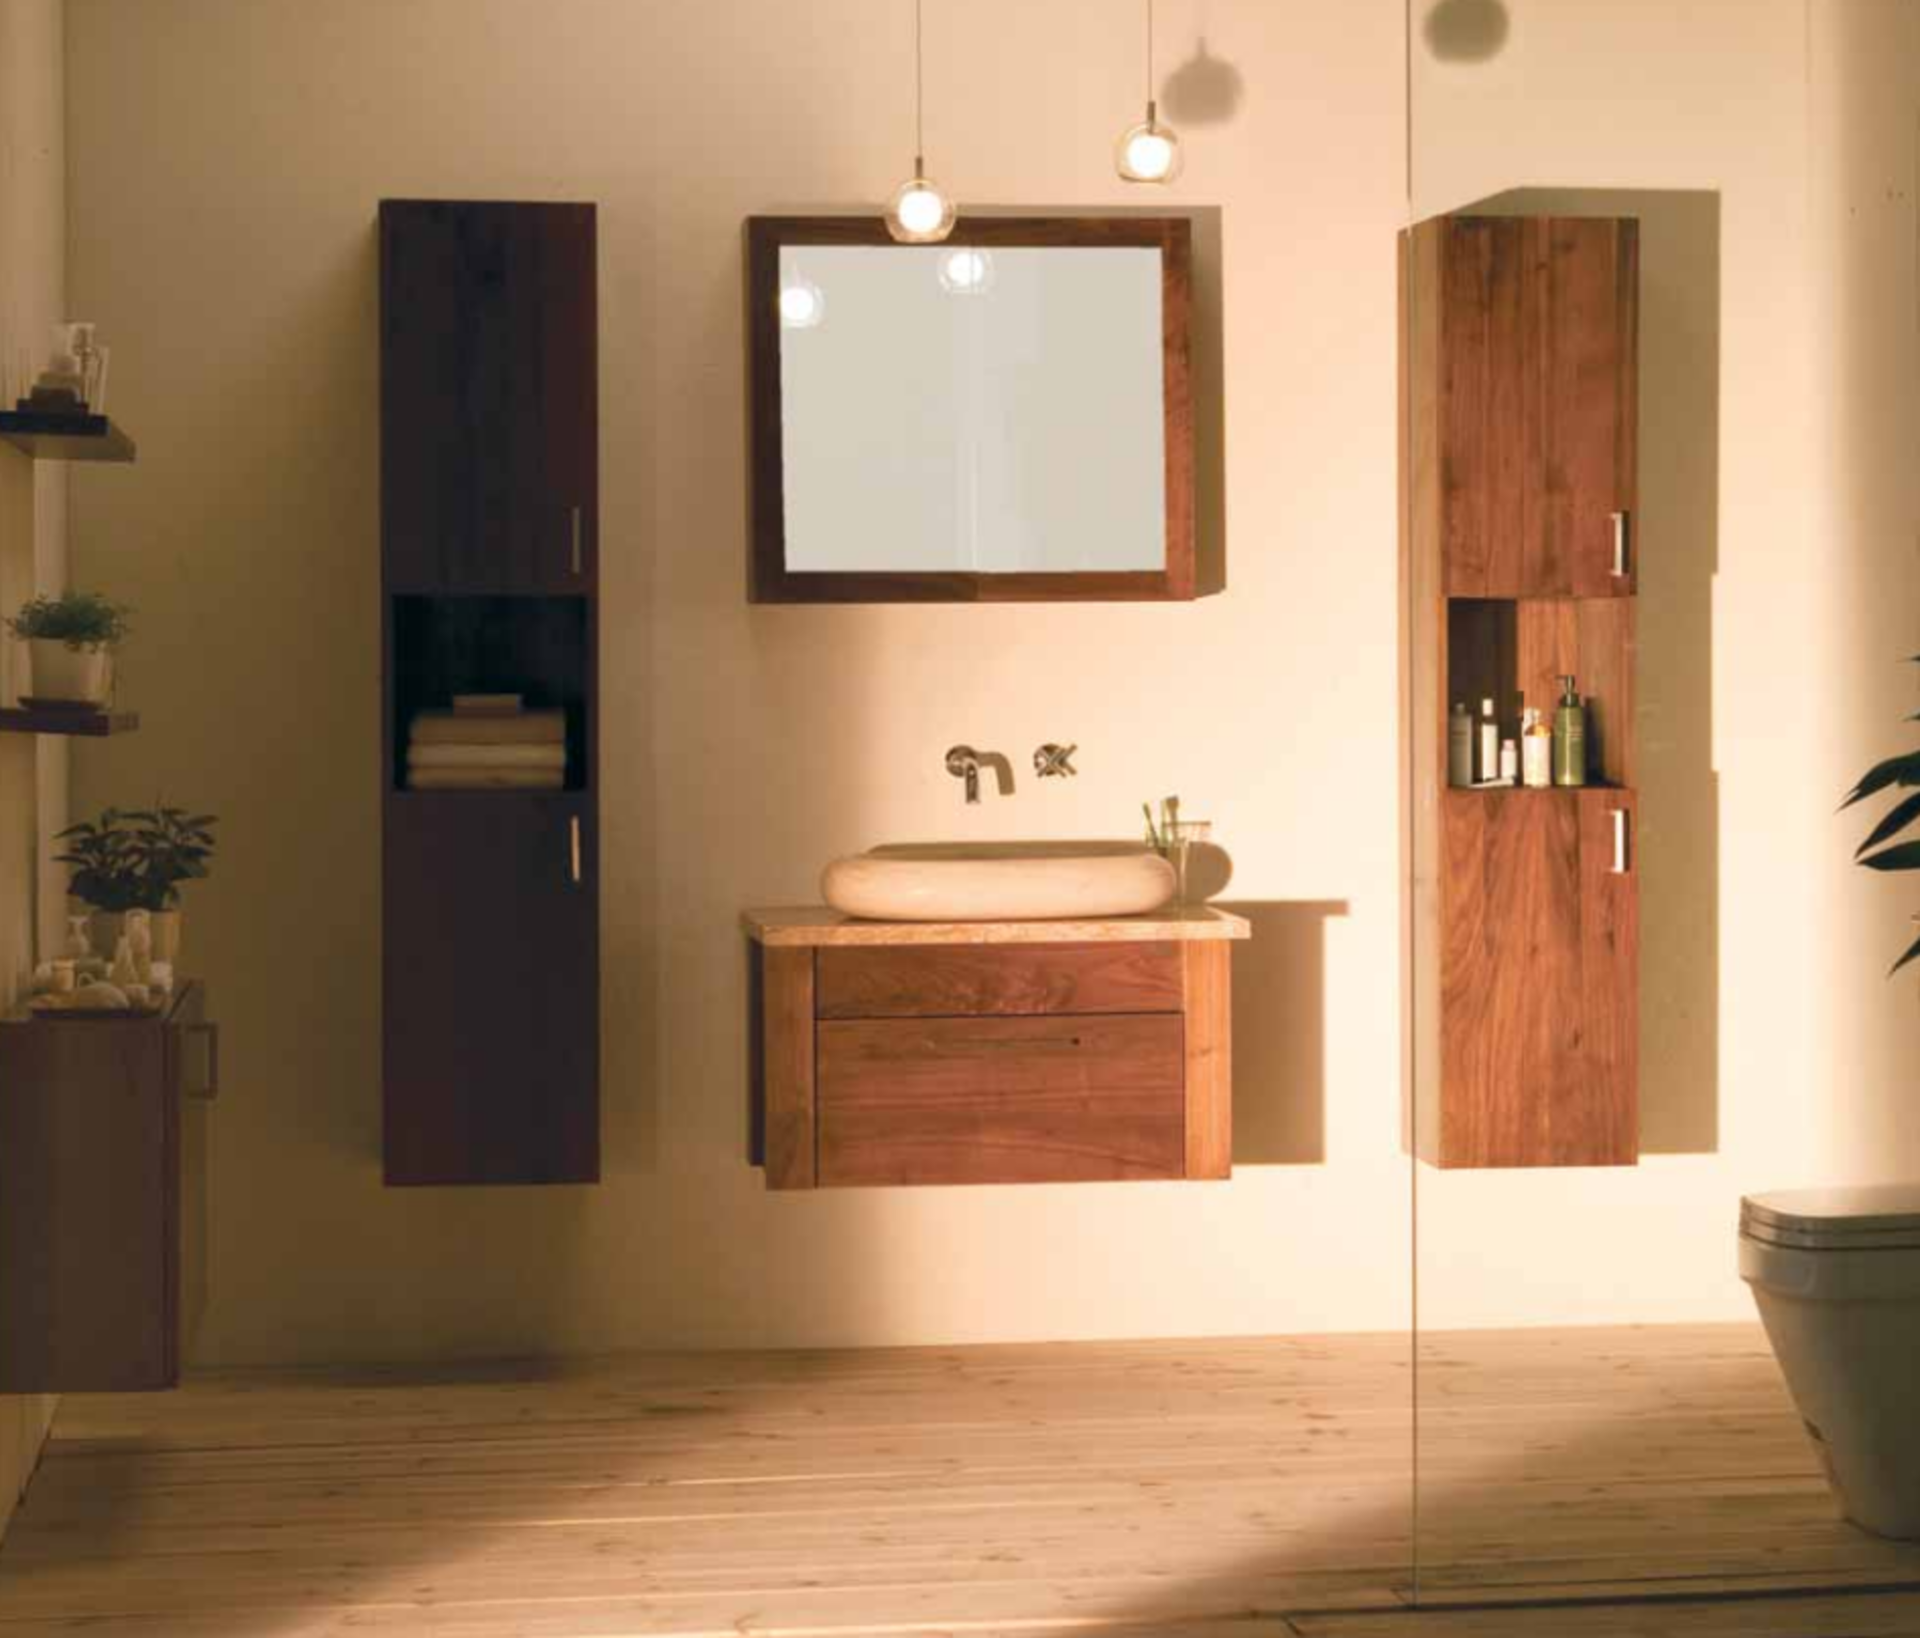 1 x Stonearth Wall Hung Tallboy Bathroom Storage Cabinet - American Solid Walnut - Original RRP £996 - Image 11 of 16